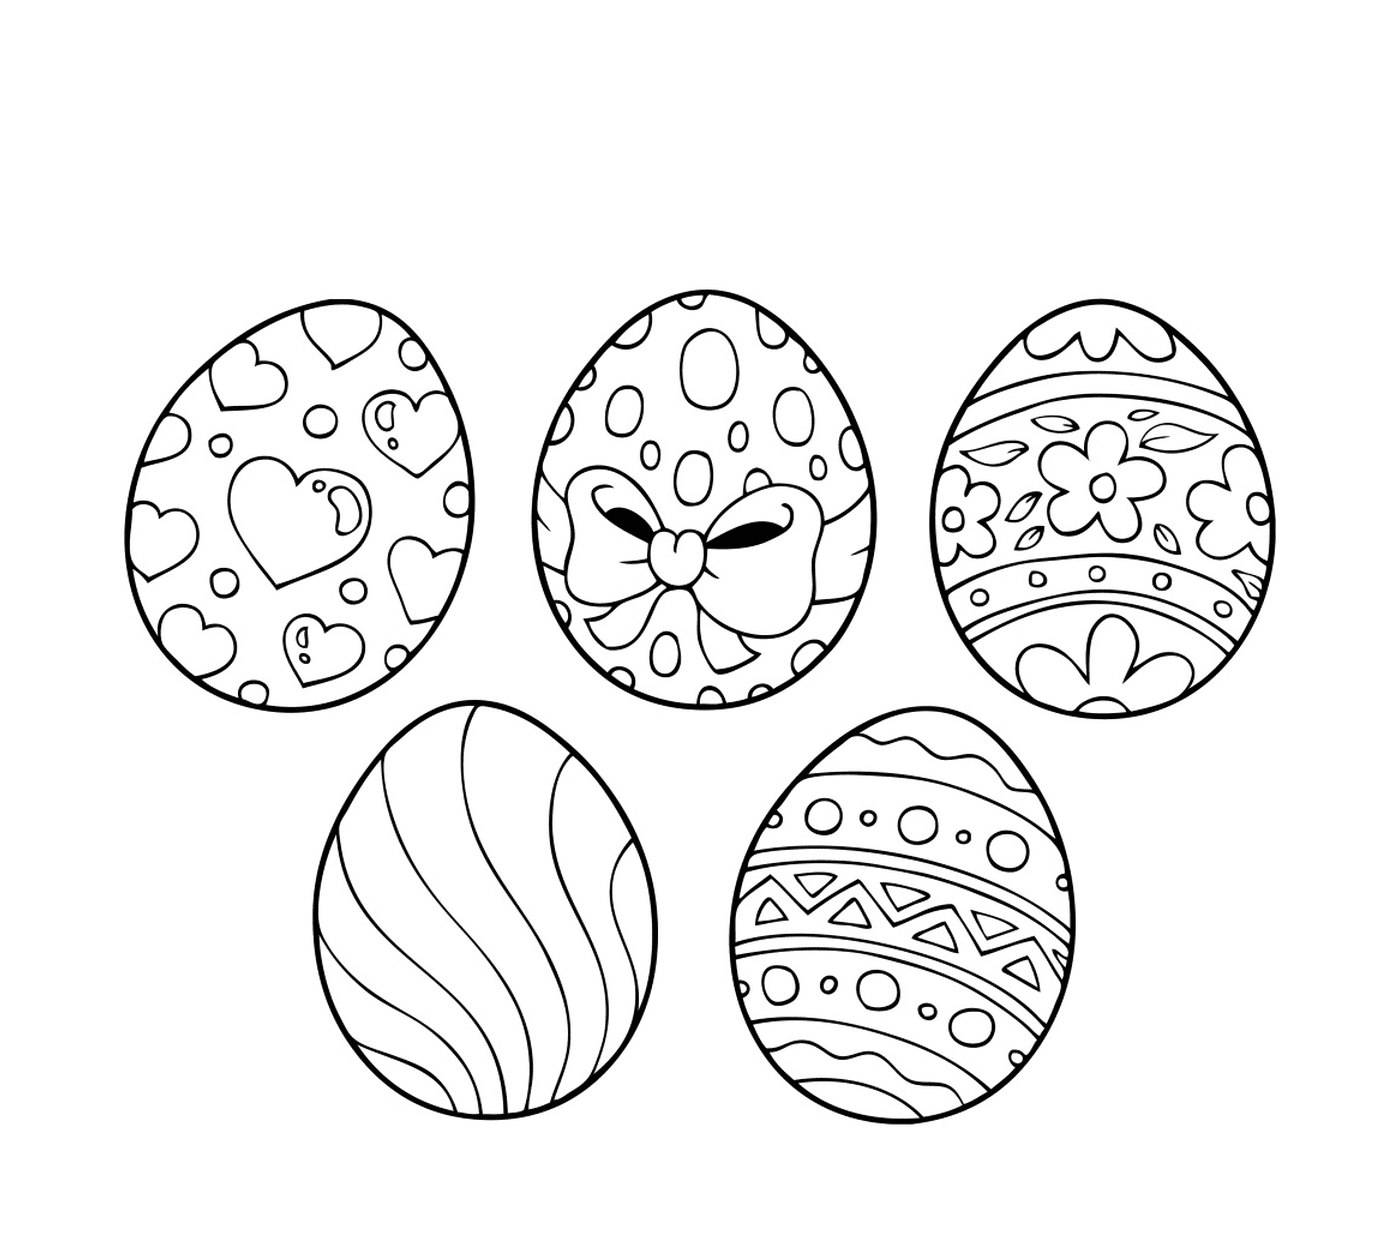  Cinco huevos de Pascua decorados 